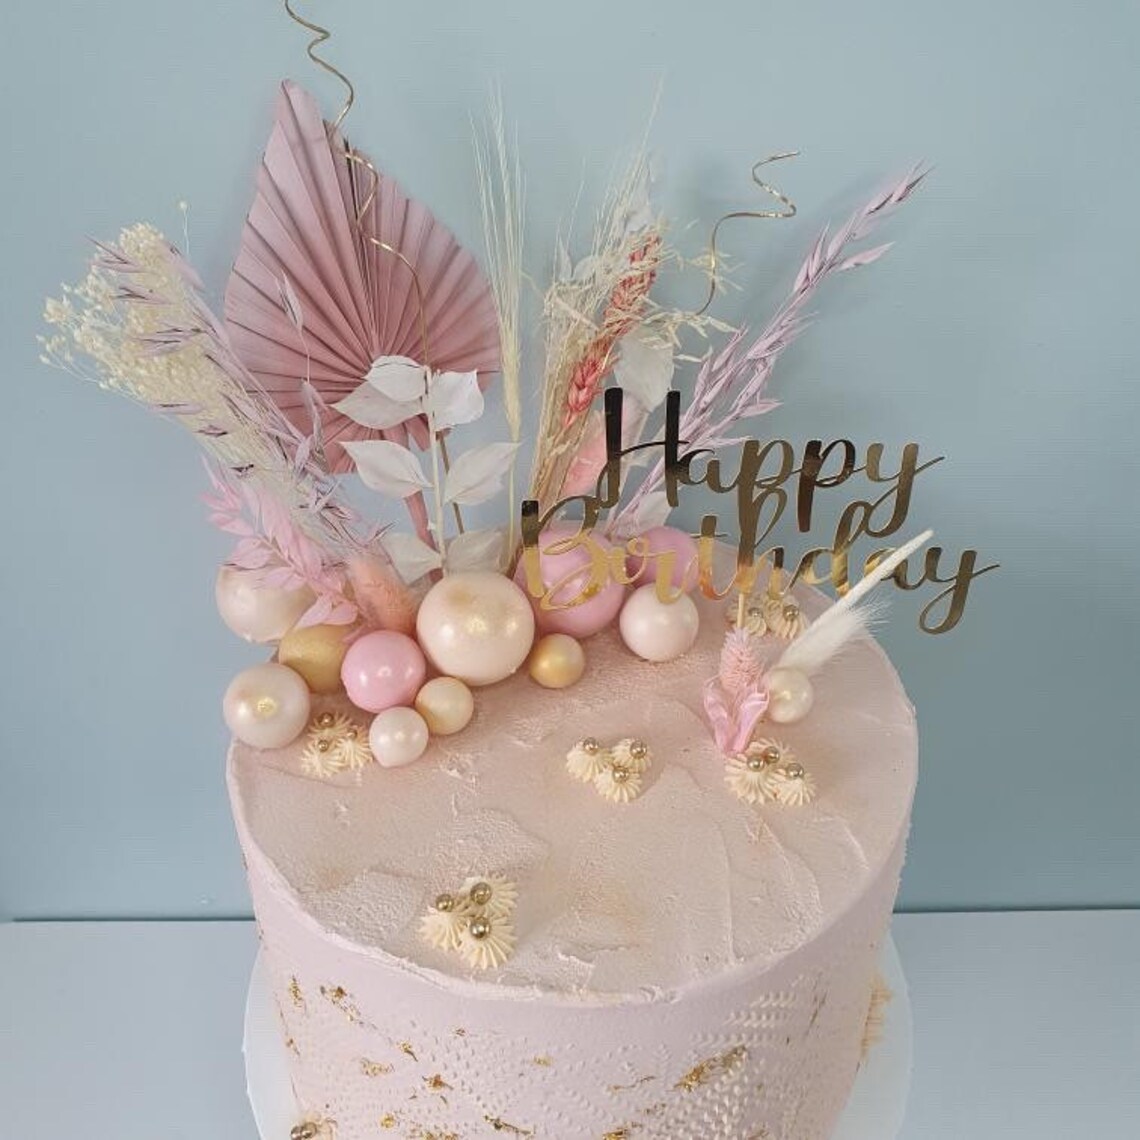 Dried flower bouquet mini pampas grass home decor cake | Etsy